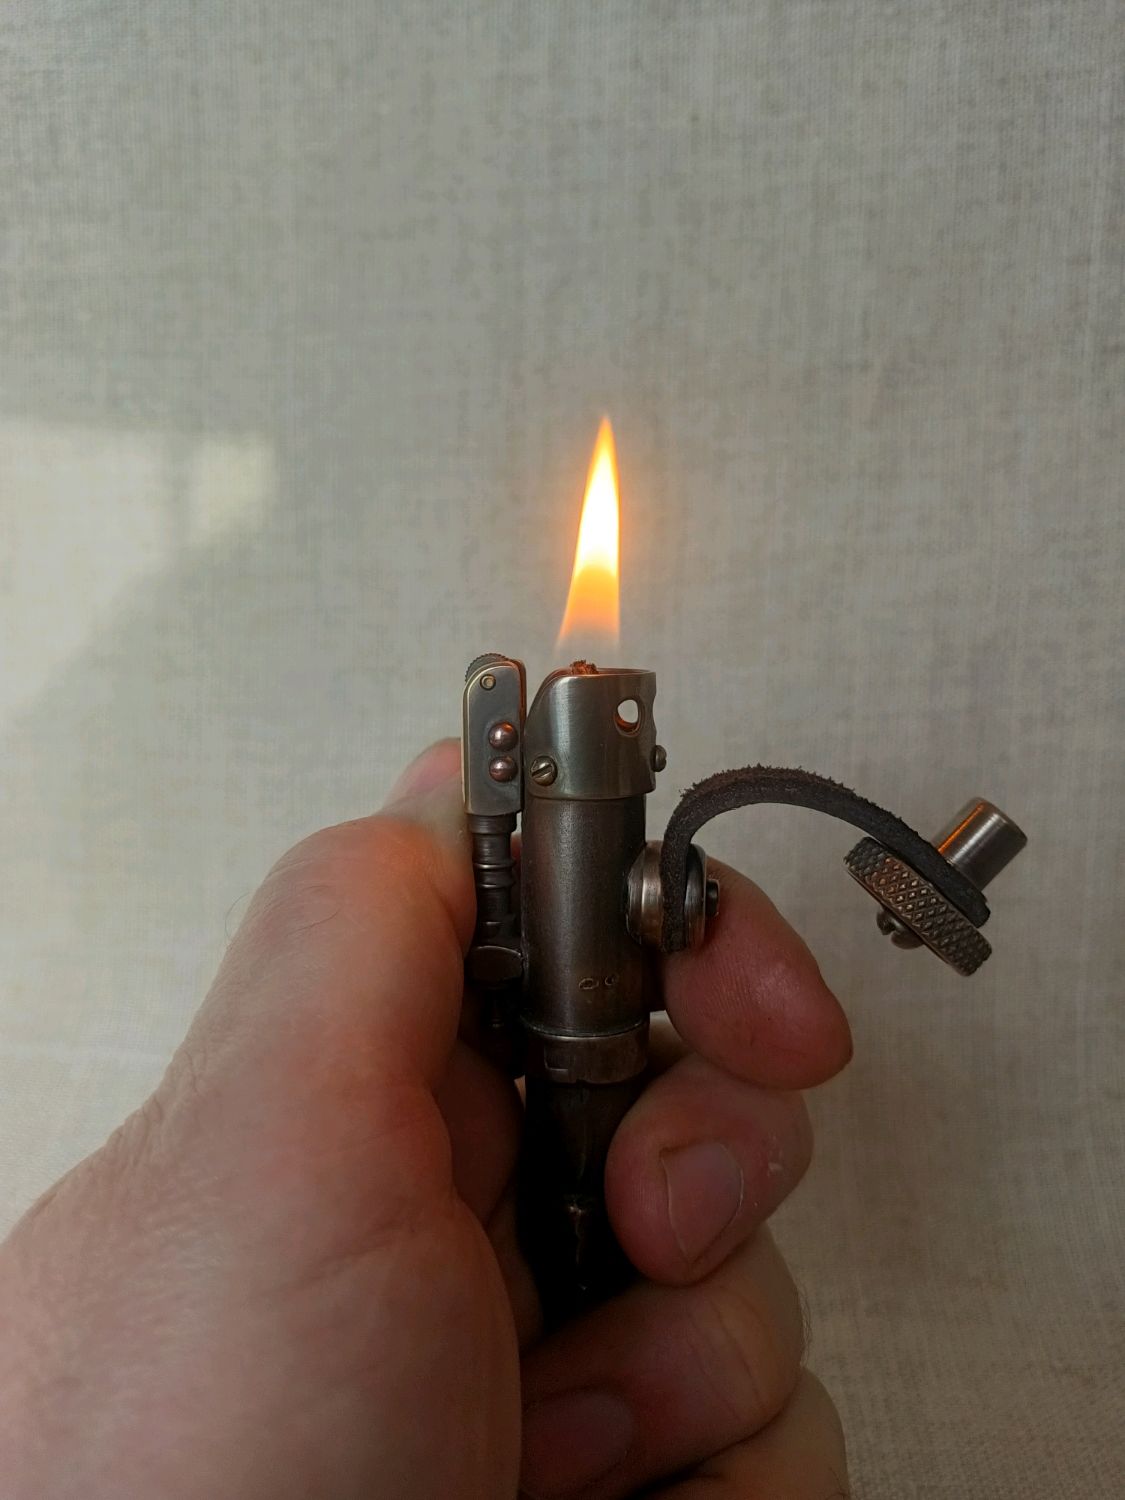 Стимпанк USB-зажигалка своими руками ( фото) - БЛЕВАДА